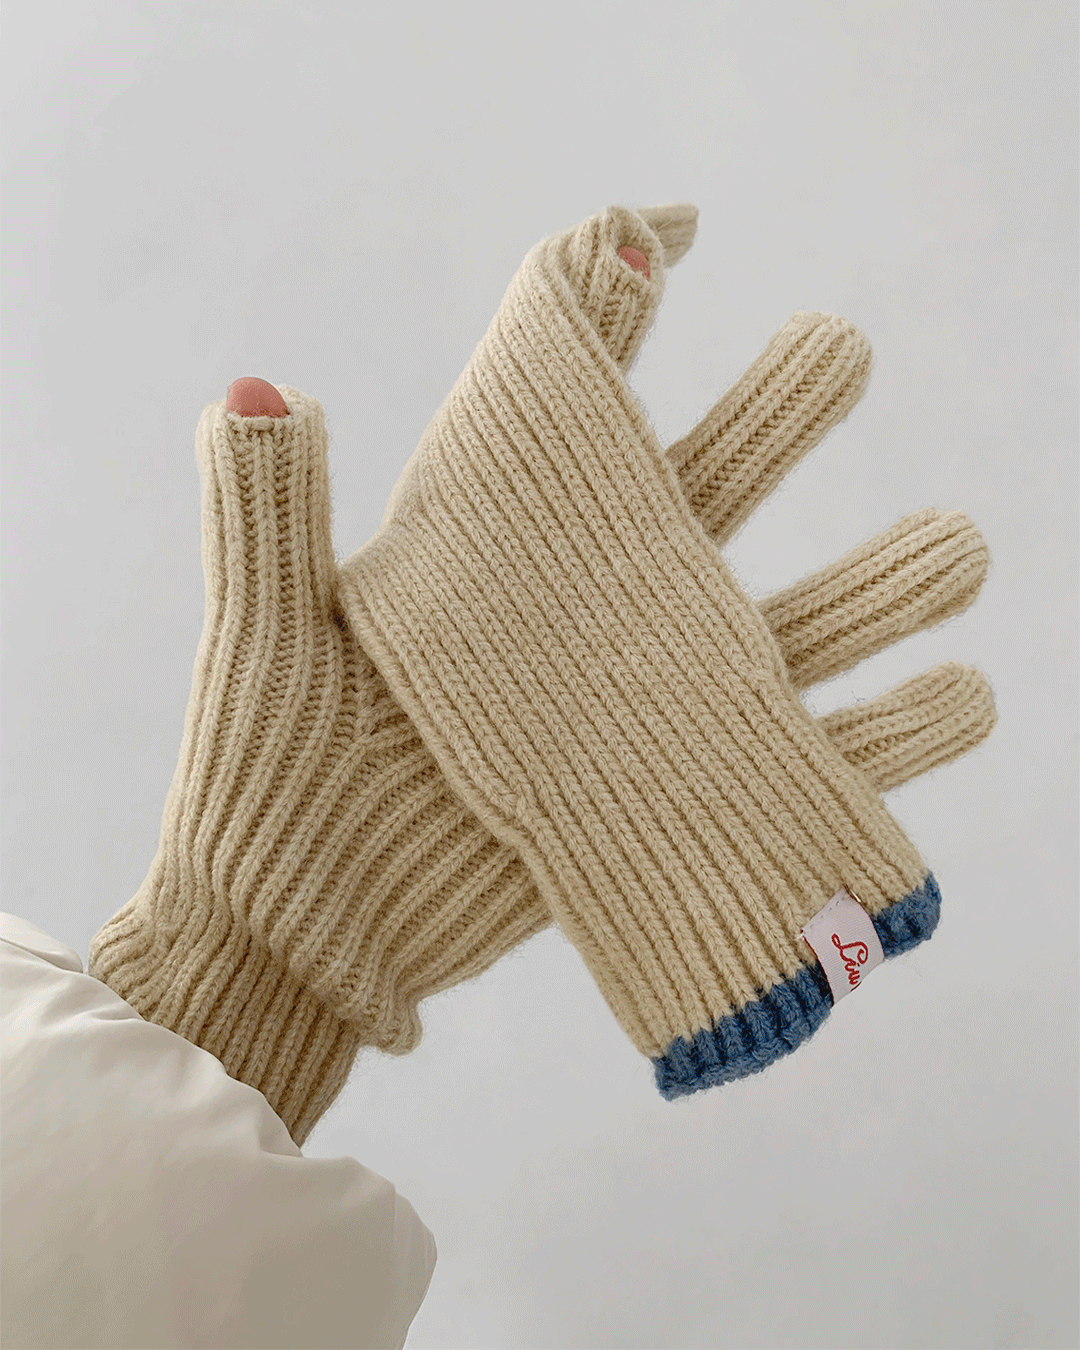 Mix gloves